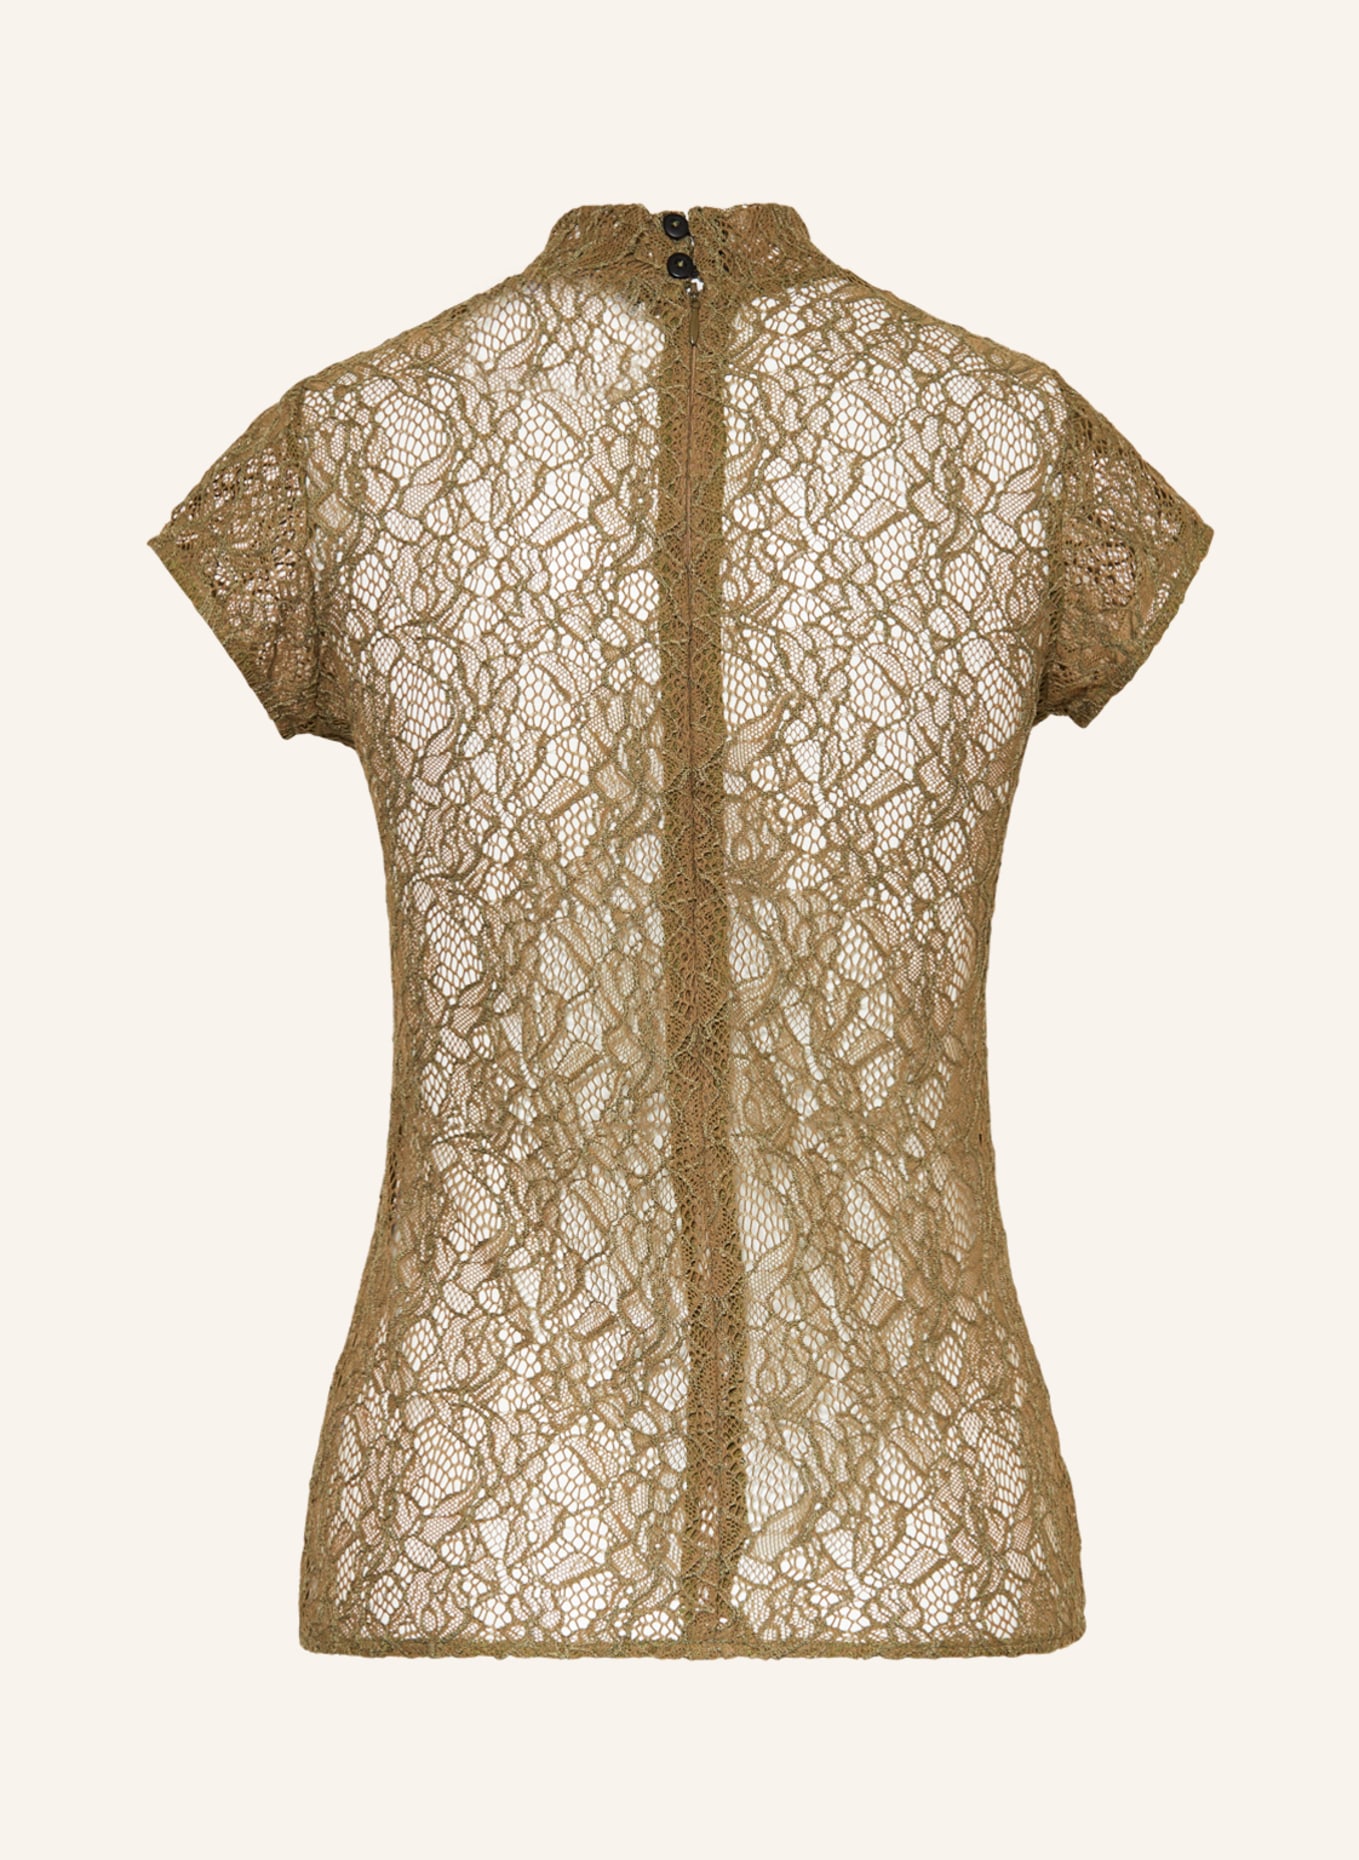 KINGA MATHE Dirndl blouse CHARLOTTE made of lace, Color: OLIVE (Image 2)